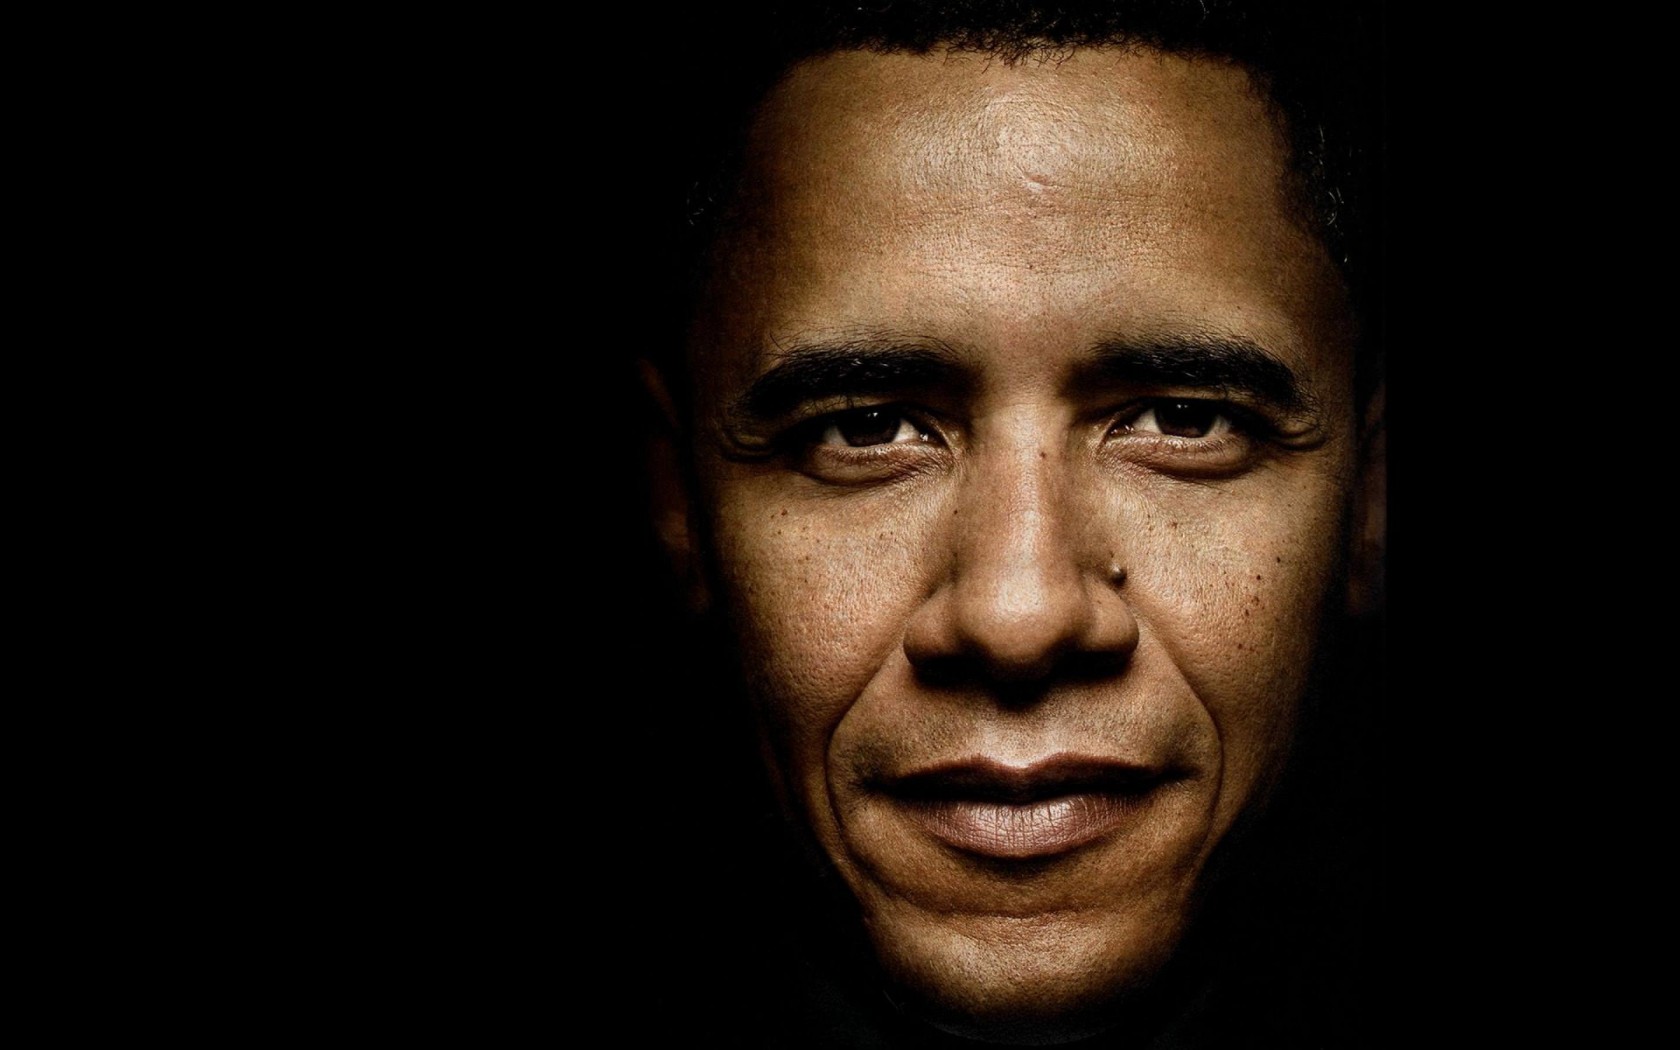 President Barack Obama Portrait Wallpaper for Desktop 1680x1050